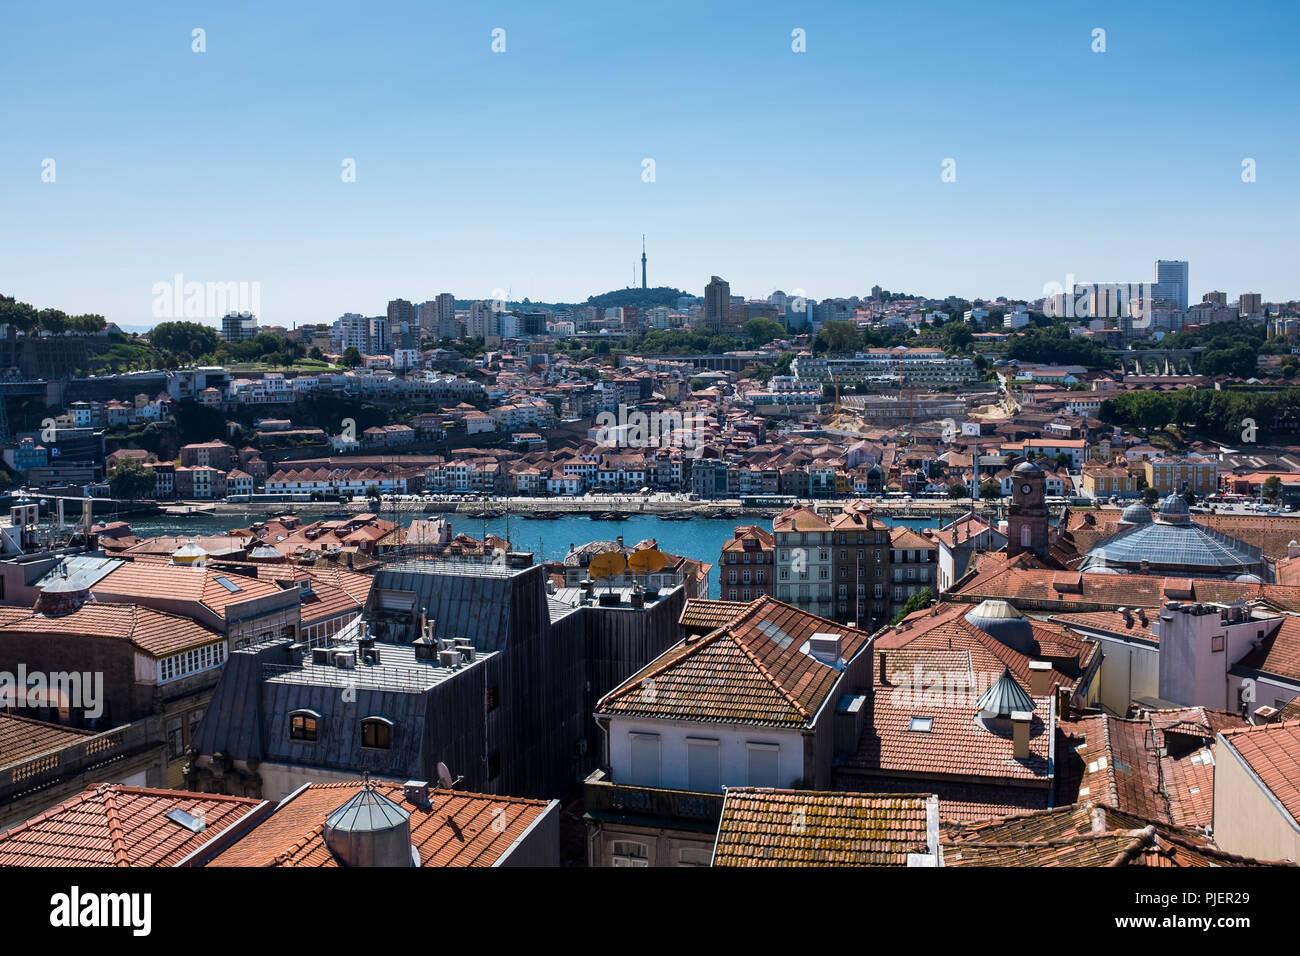 View over the rooftops towards Vila Nova de Gaia, Porto, Portugal. Stock Photo